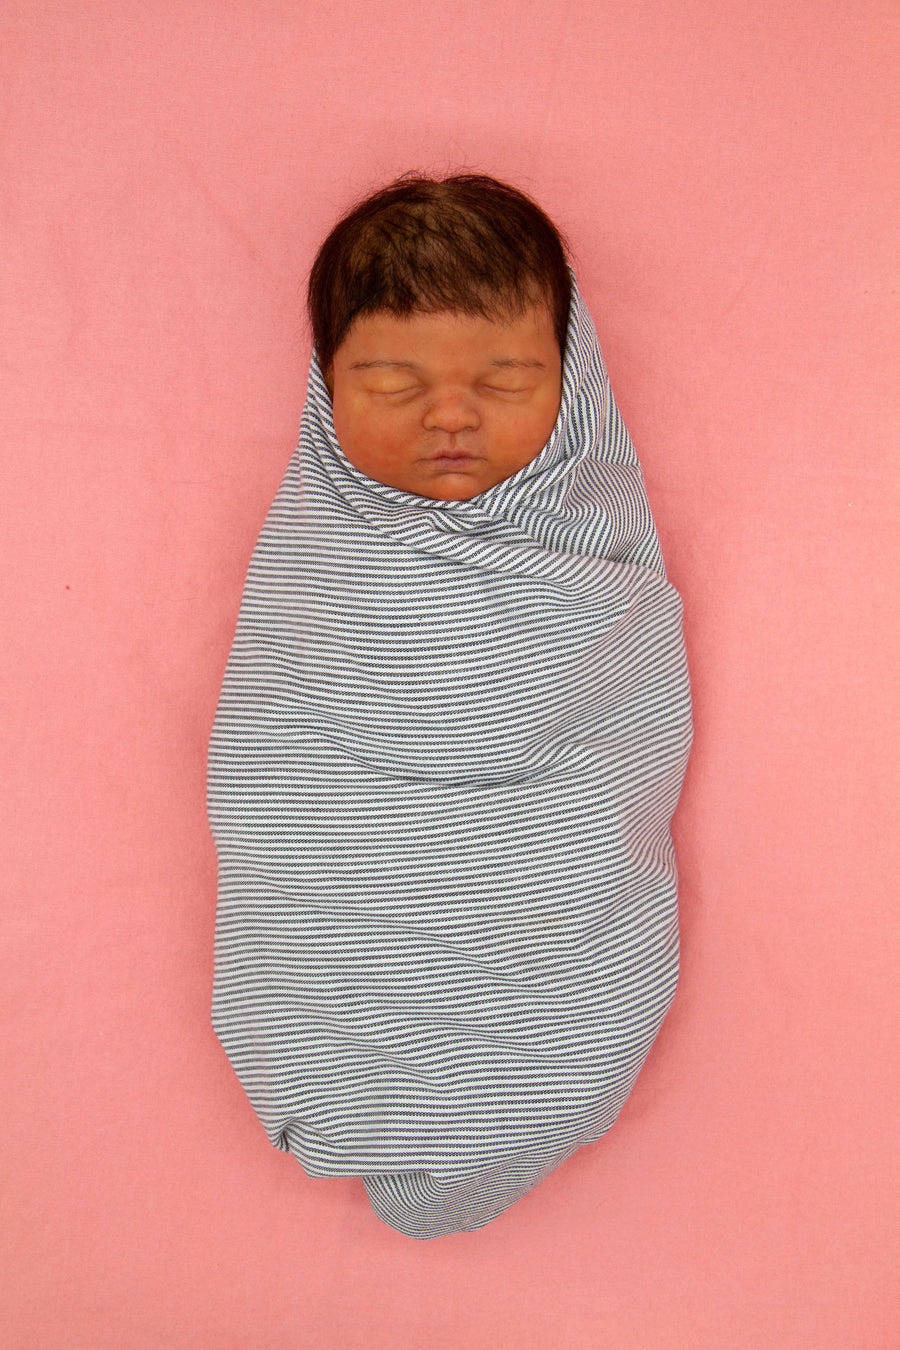 Baby Kelly Newborn